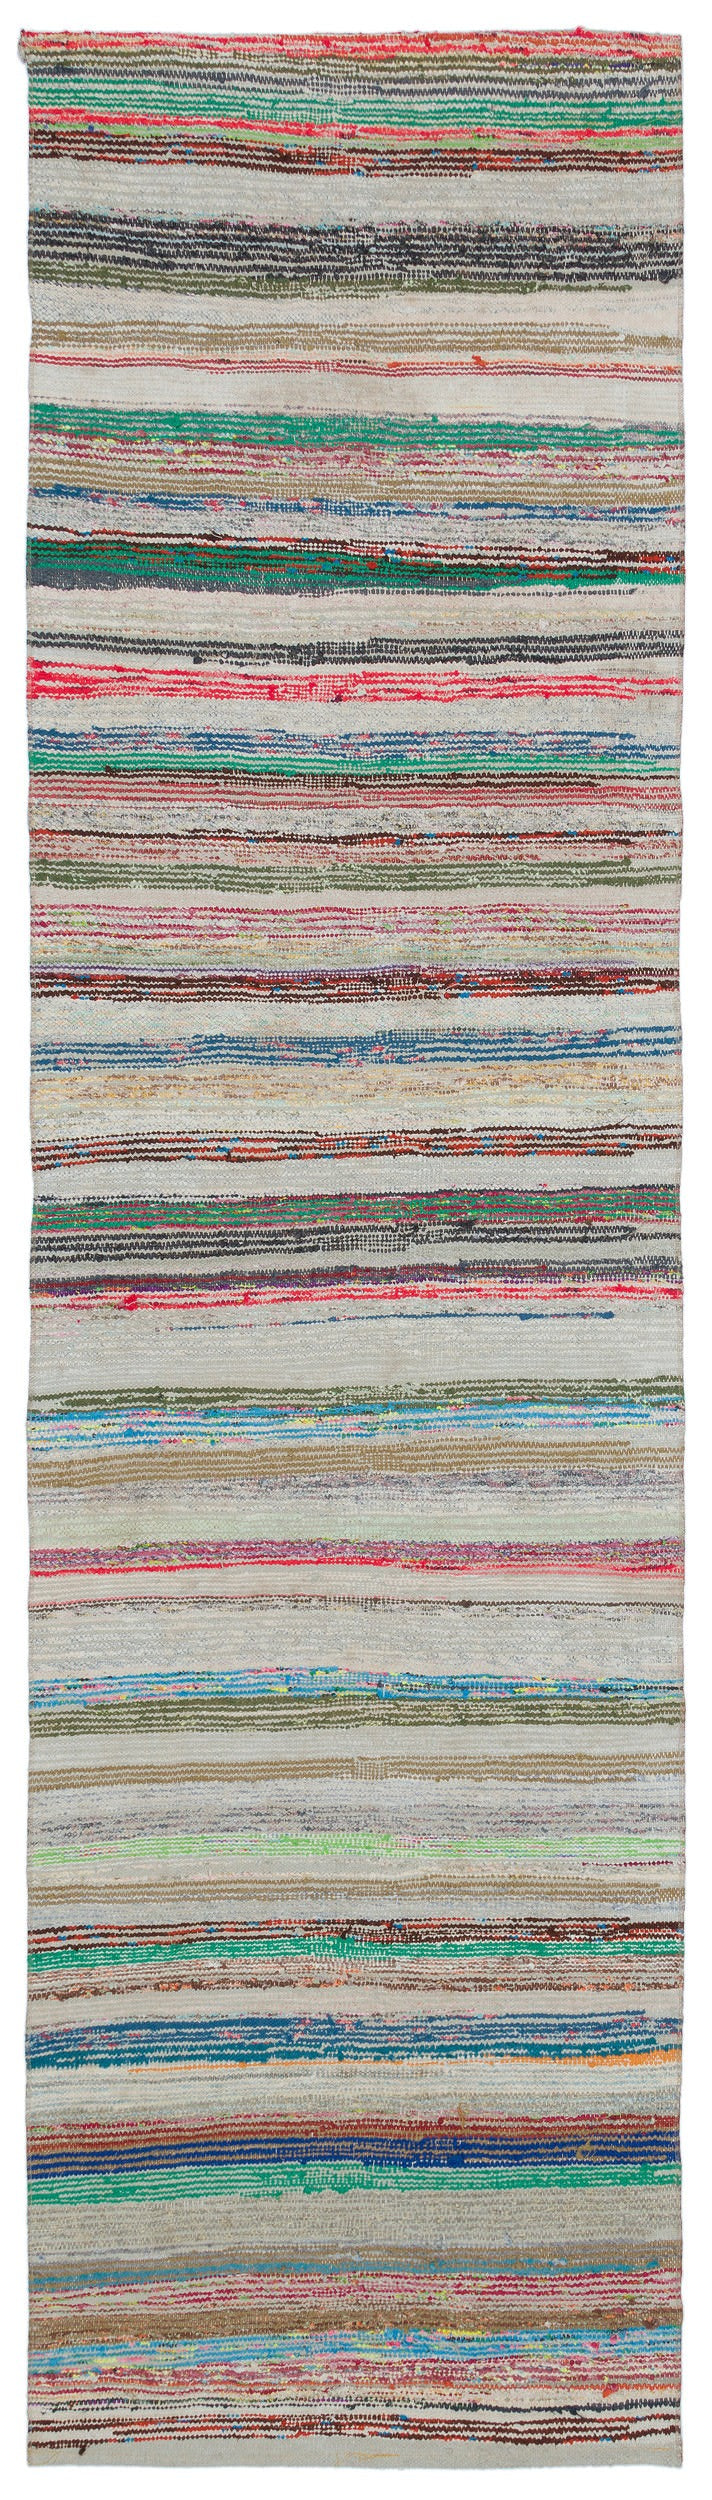 Cretan Beige Striped Wool Hand-Woven Carpet 086 x 320